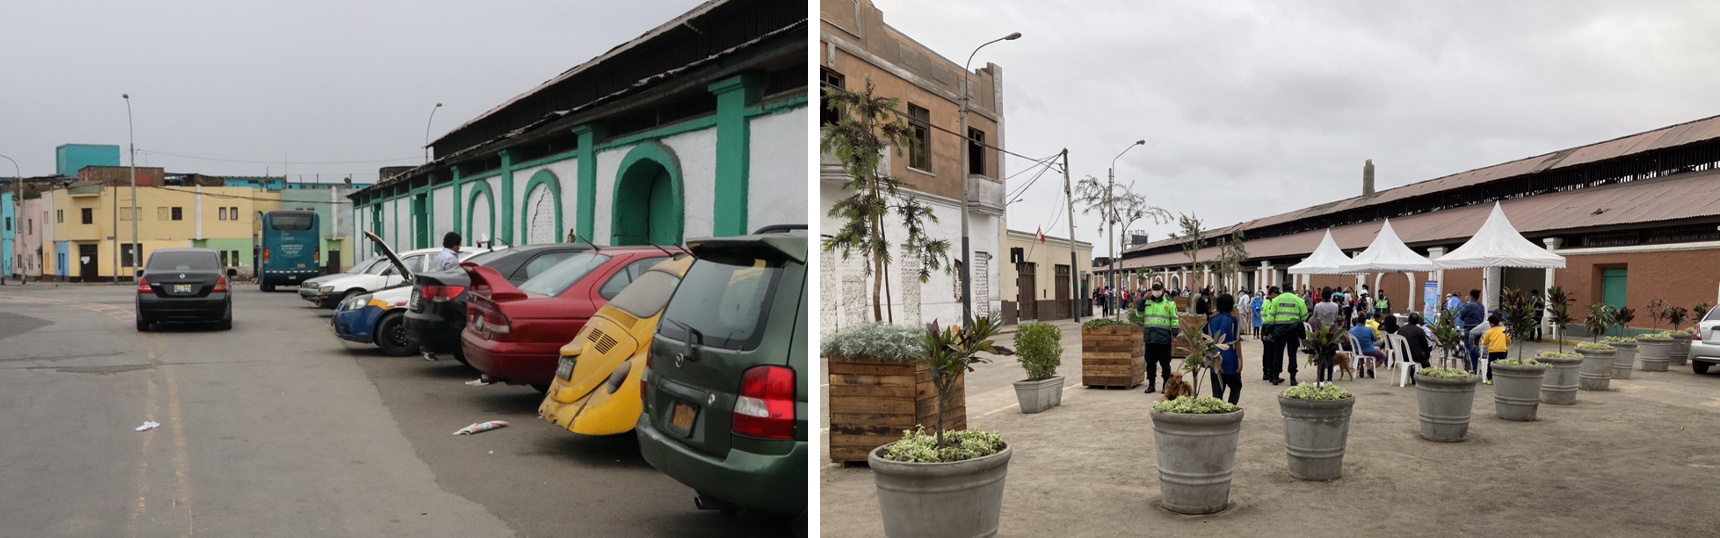 Gambar sebelum dan sesudah di Lima